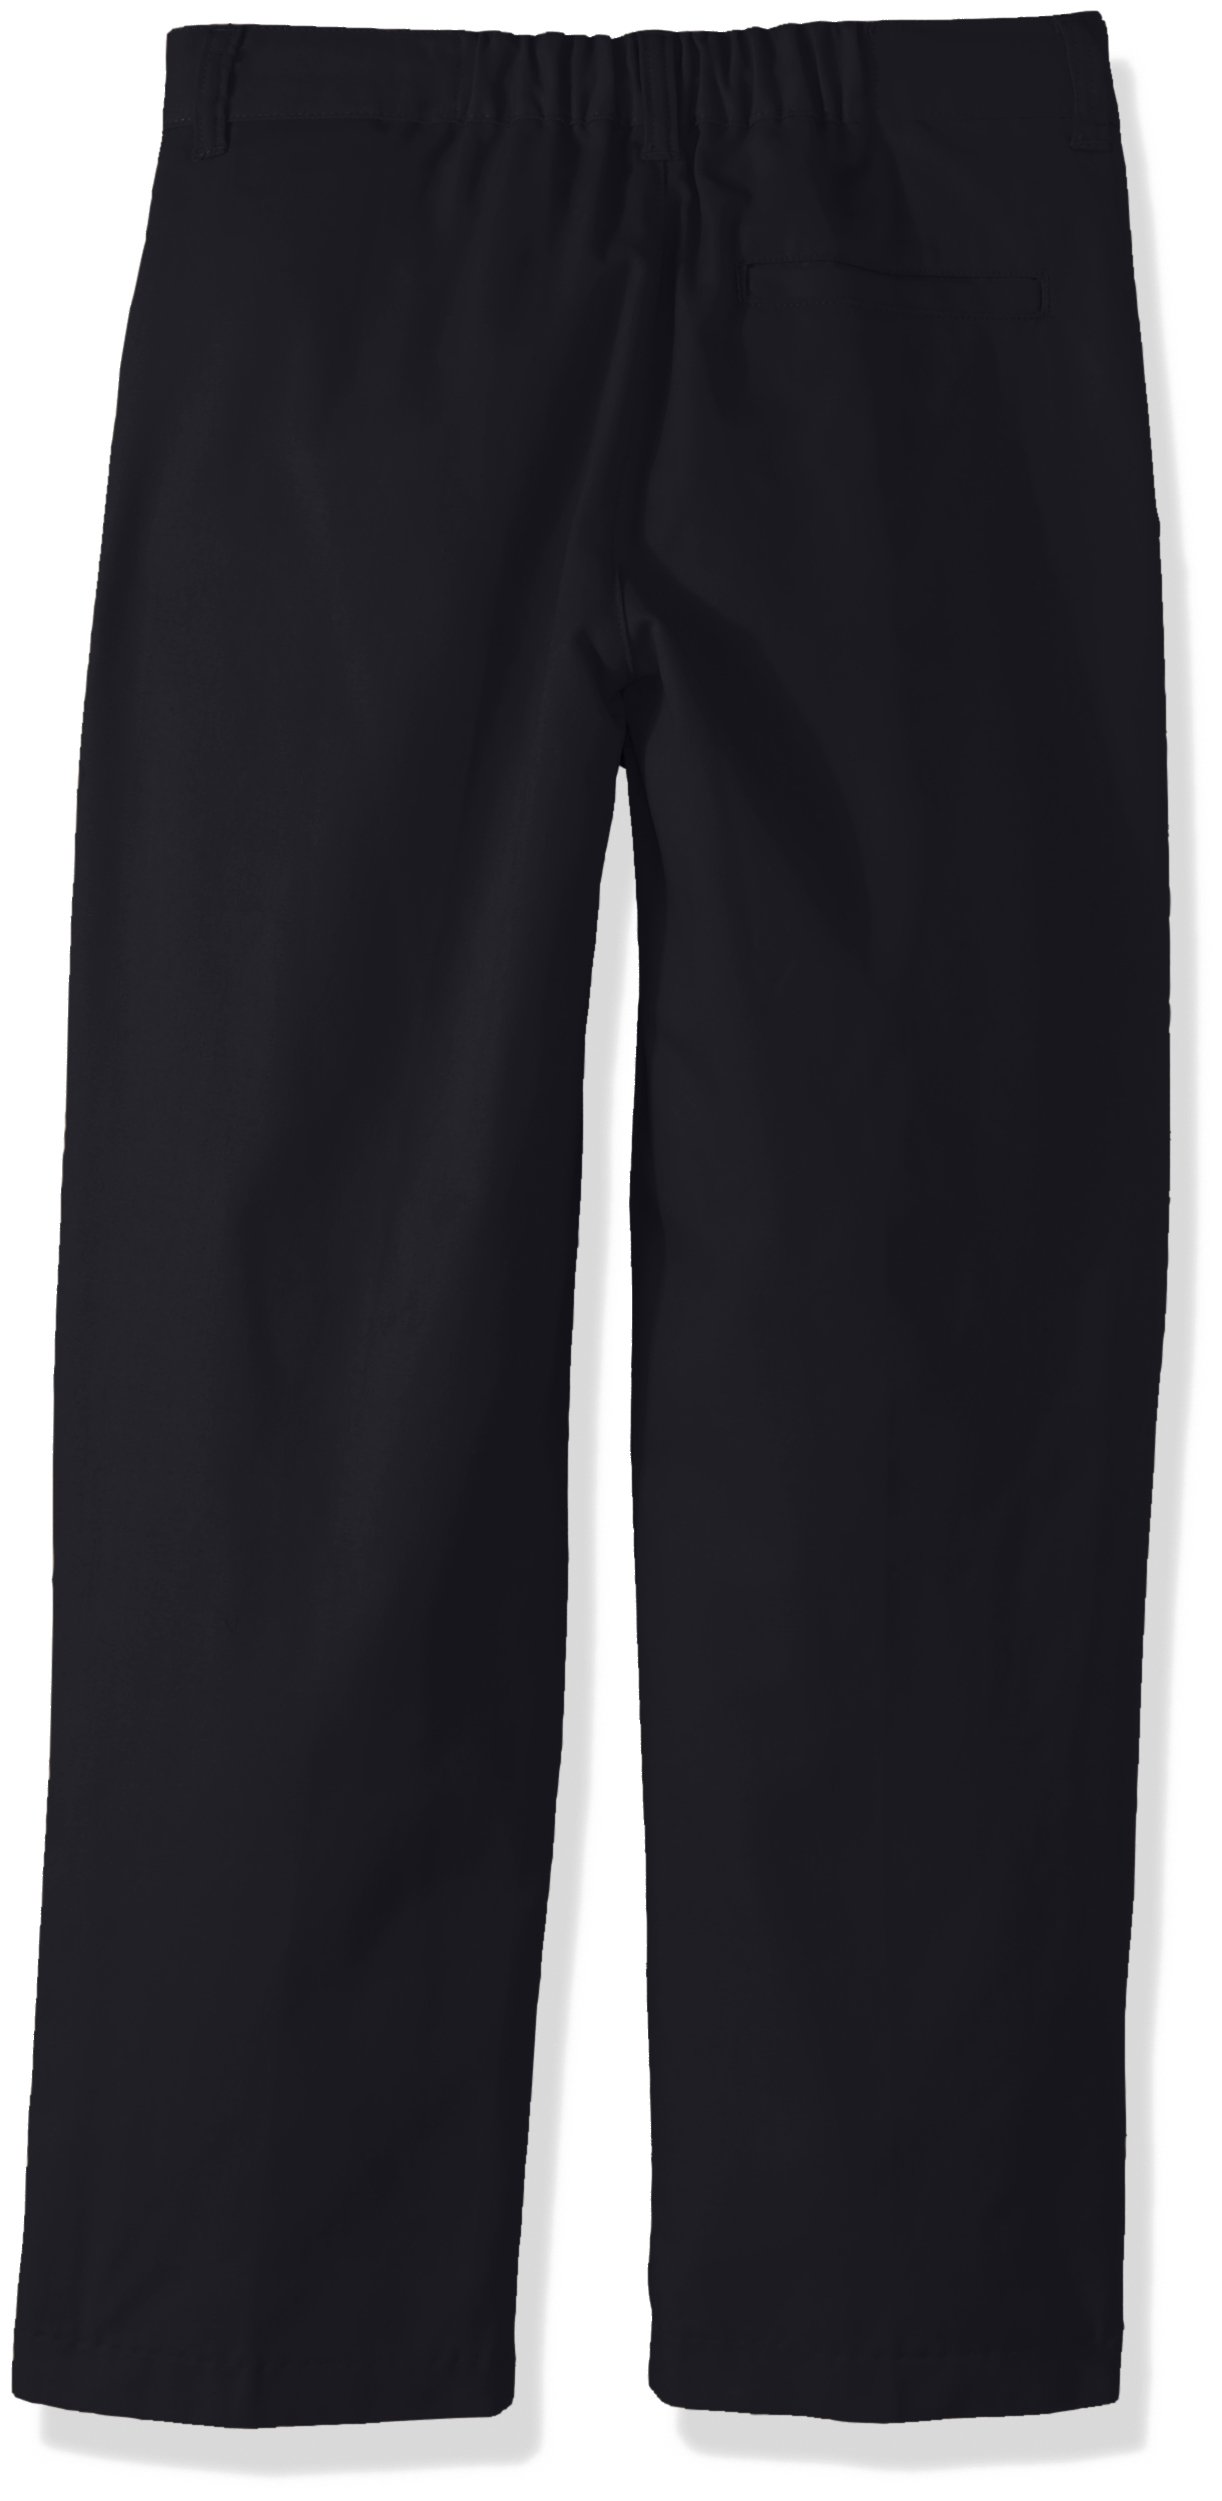 REAL SCHOOL Boys Husky Size Flat Front Pants School Uniform Approved - image 2 of 2